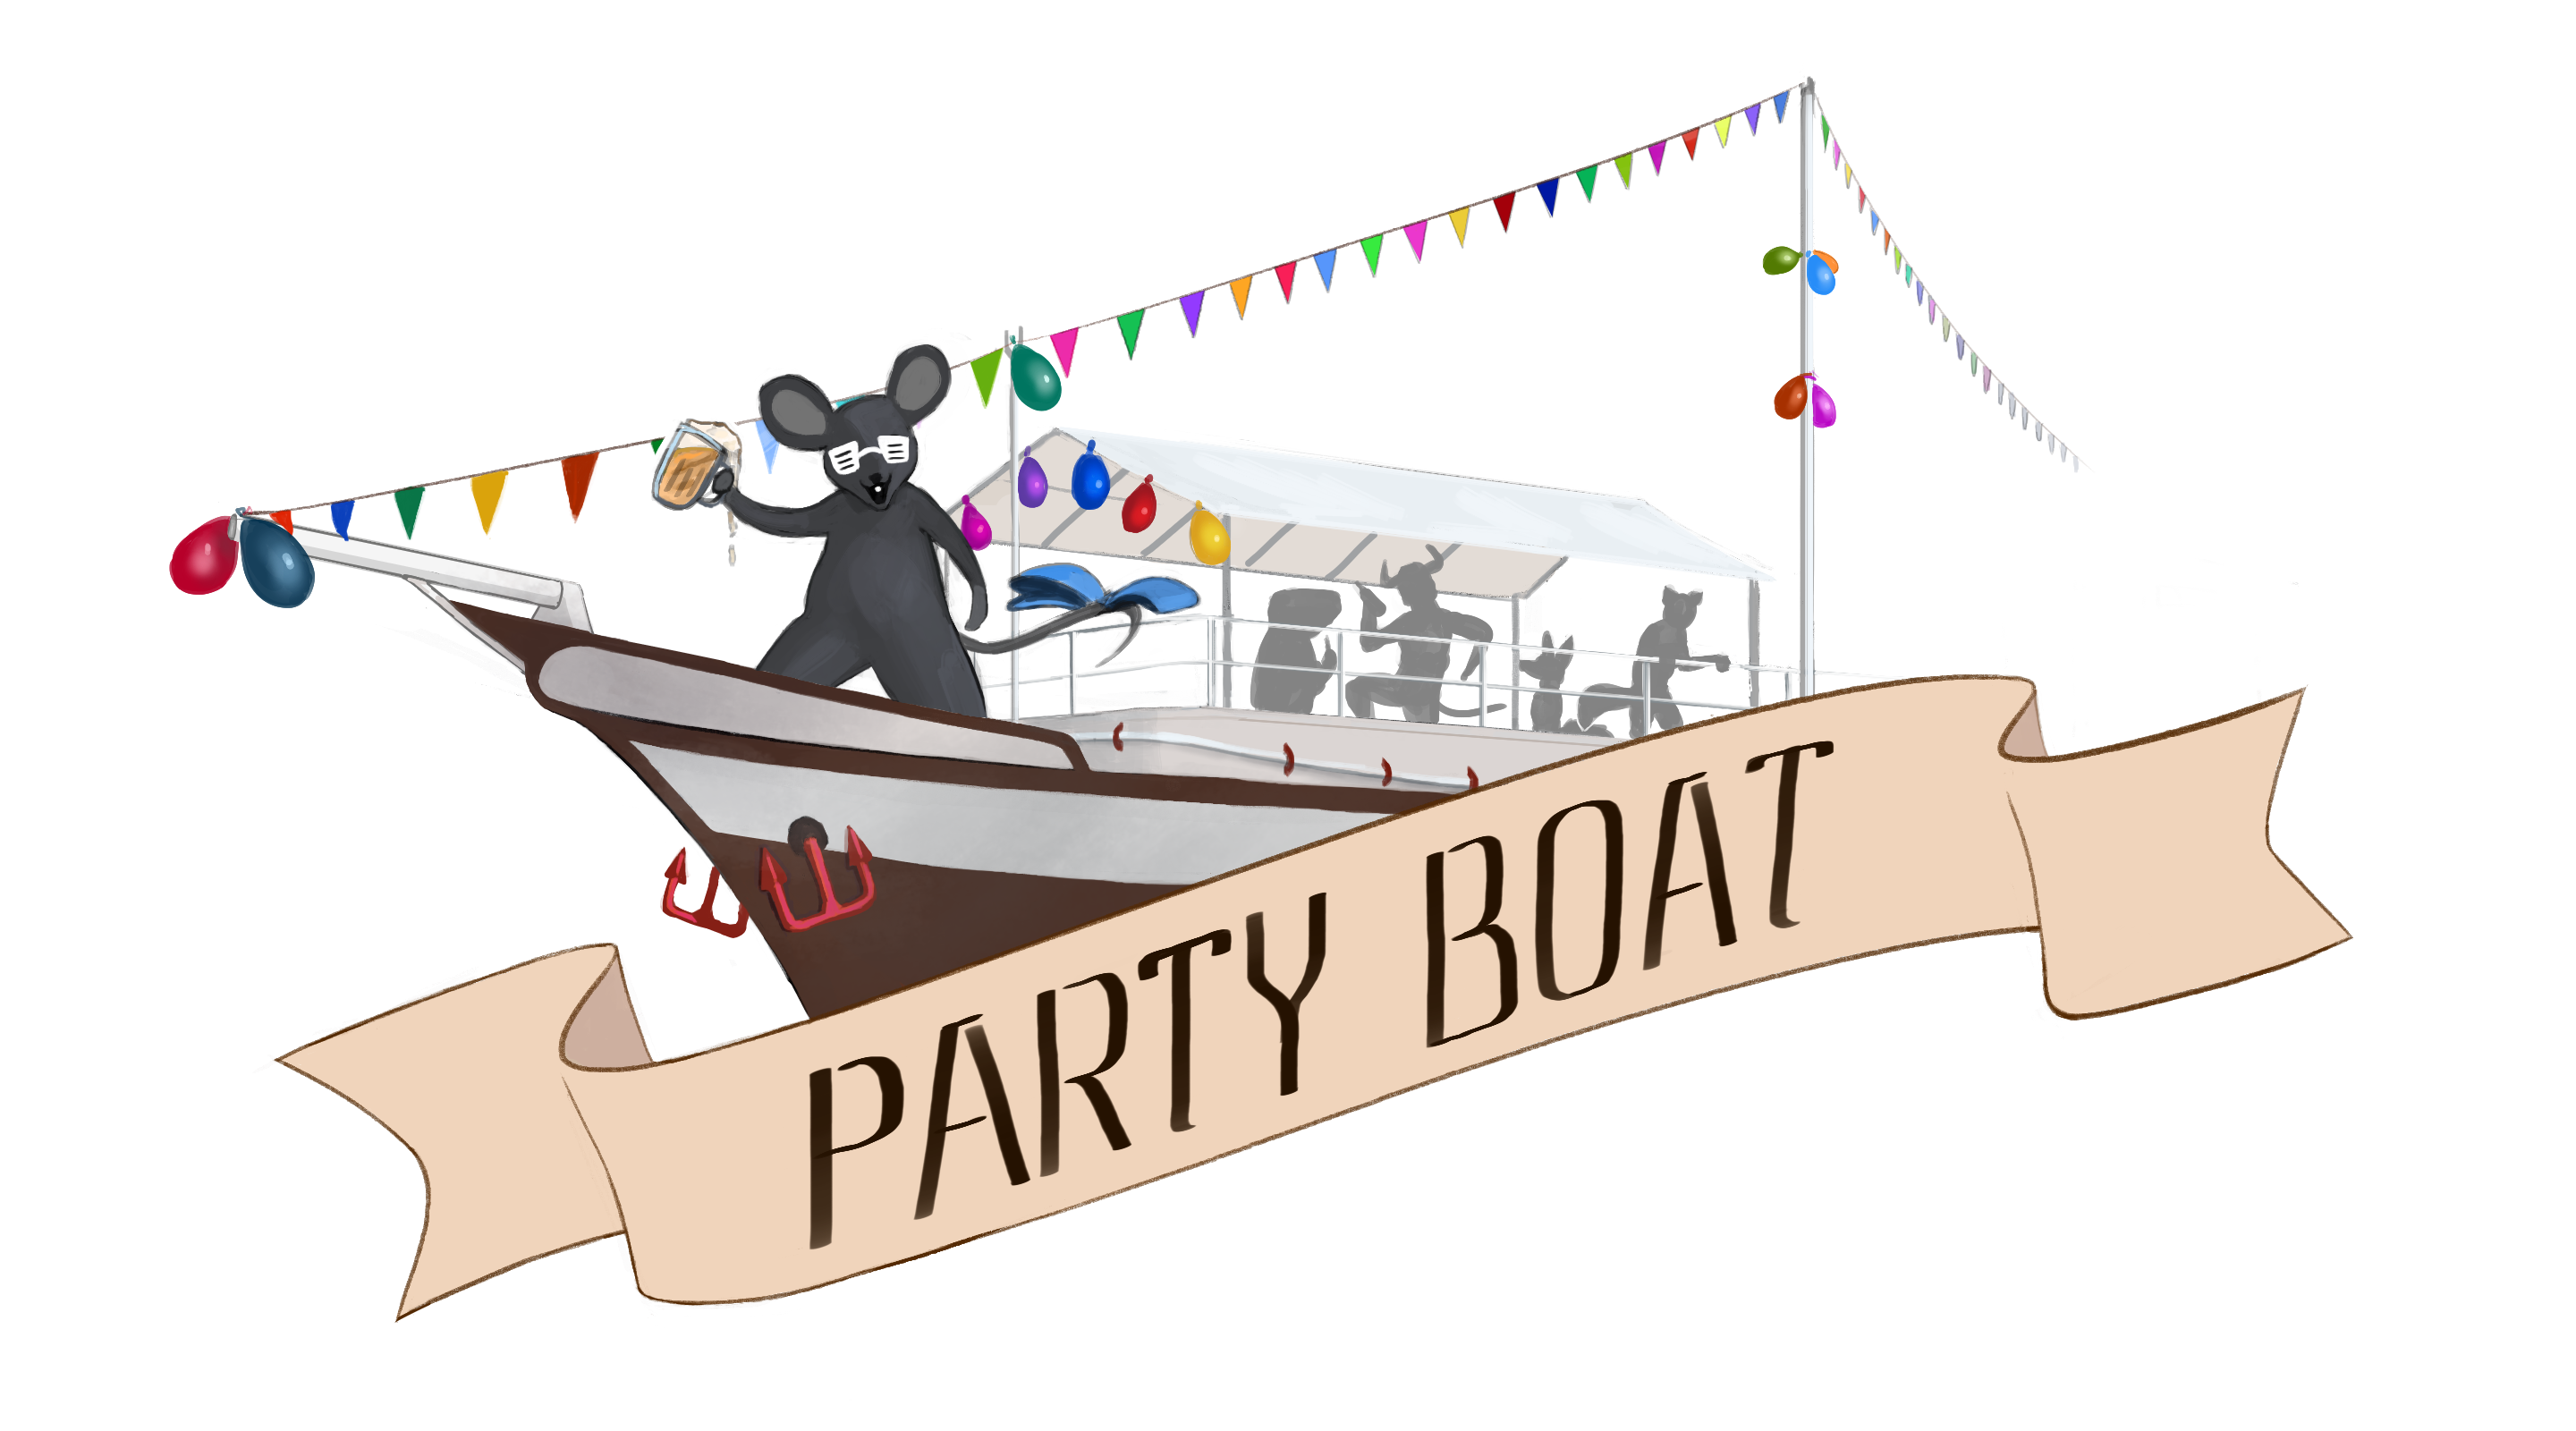 Party Boat Organizers - NordicFuzzCon 2020